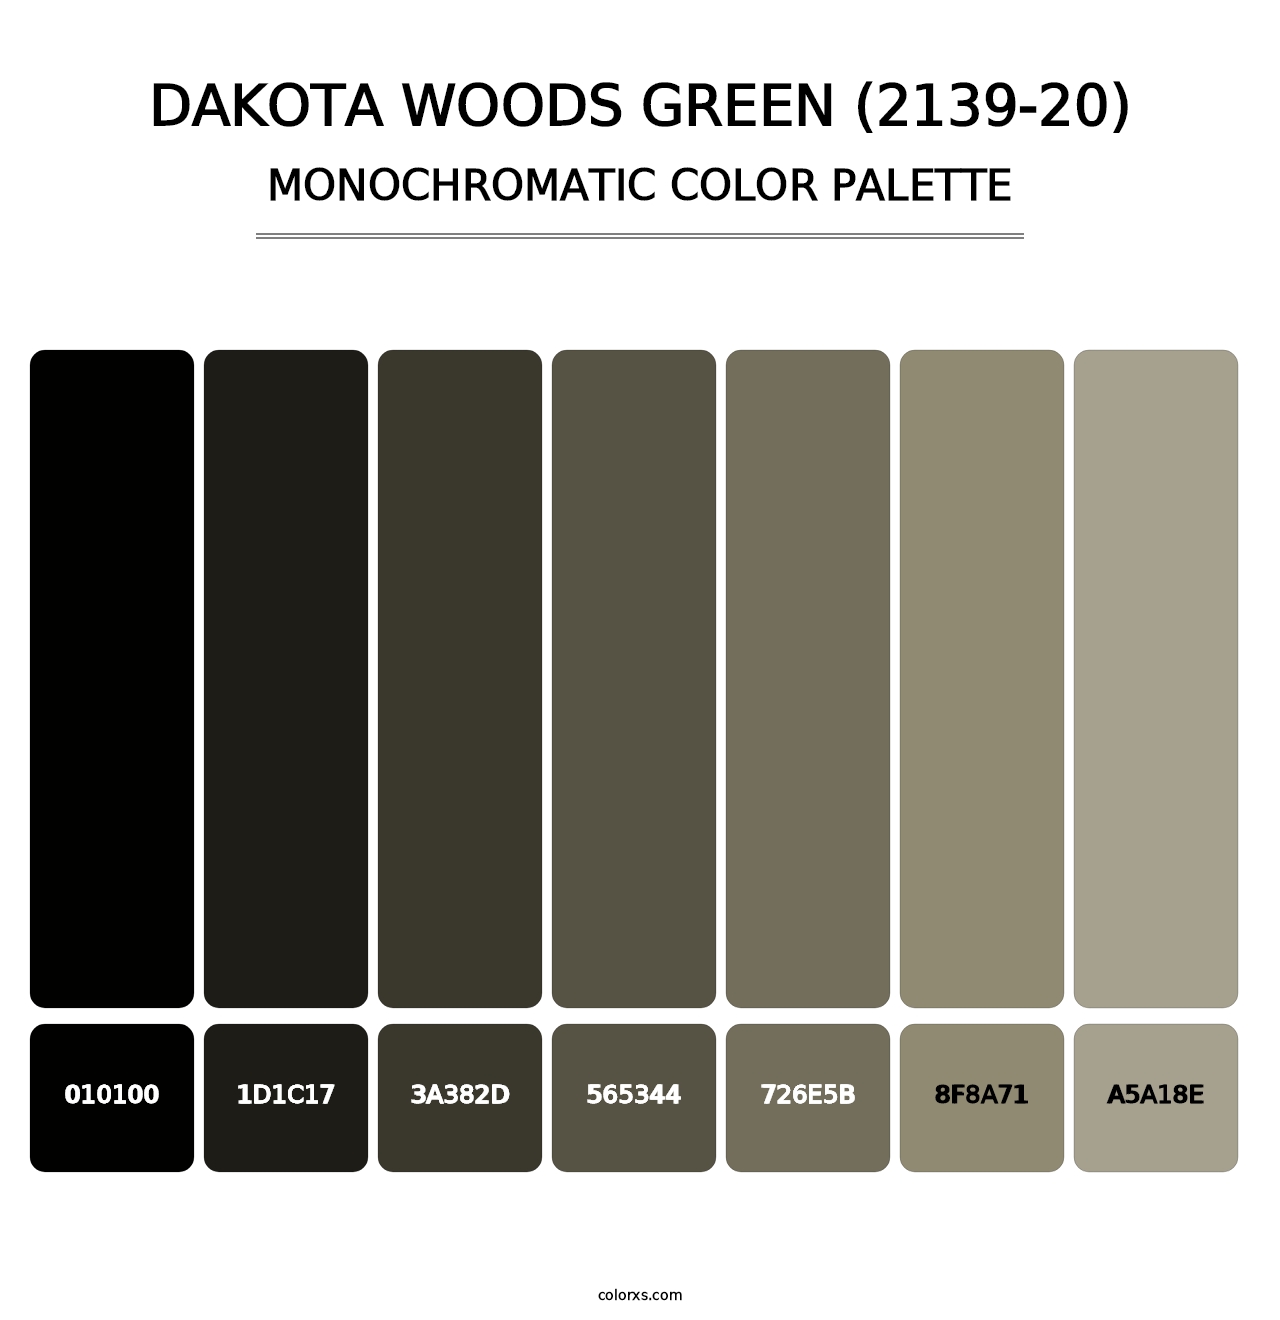 Dakota Woods Green (2139-20) - Monochromatic Color Palette